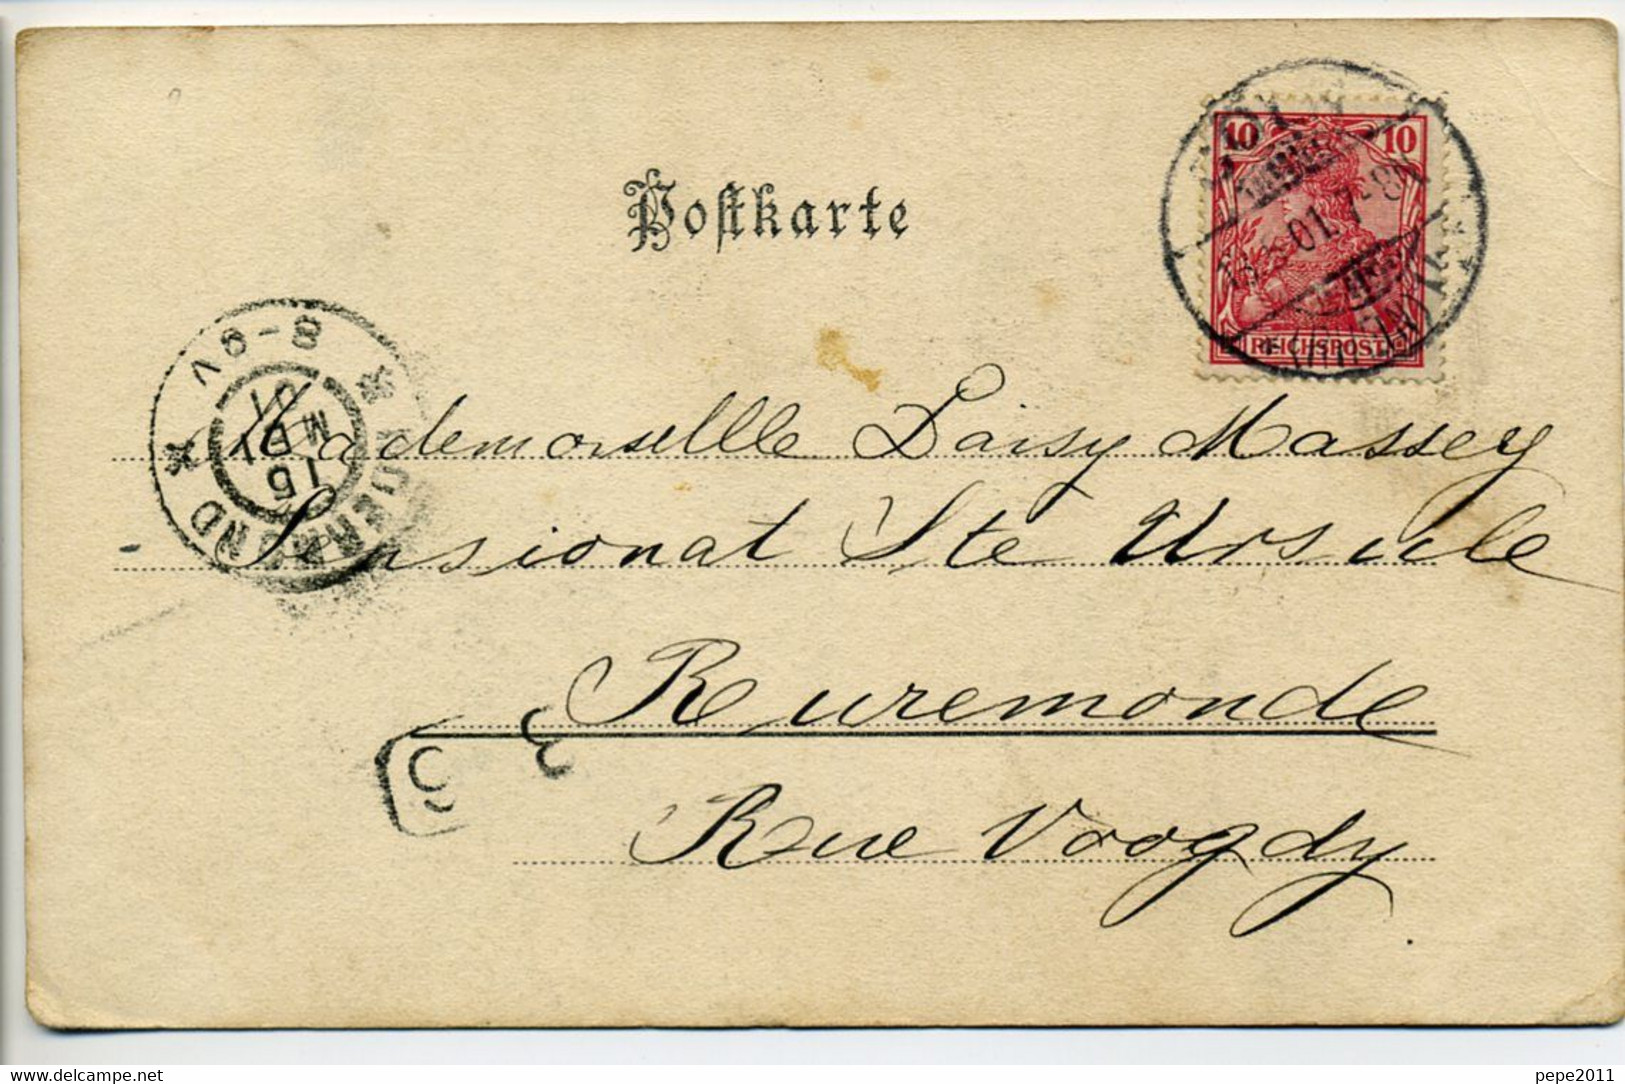 CPA KÖLN KOELN COLOGNE Gruss Aus Köln Hohestrasse 1901  Vue Peu Commune - Koeln